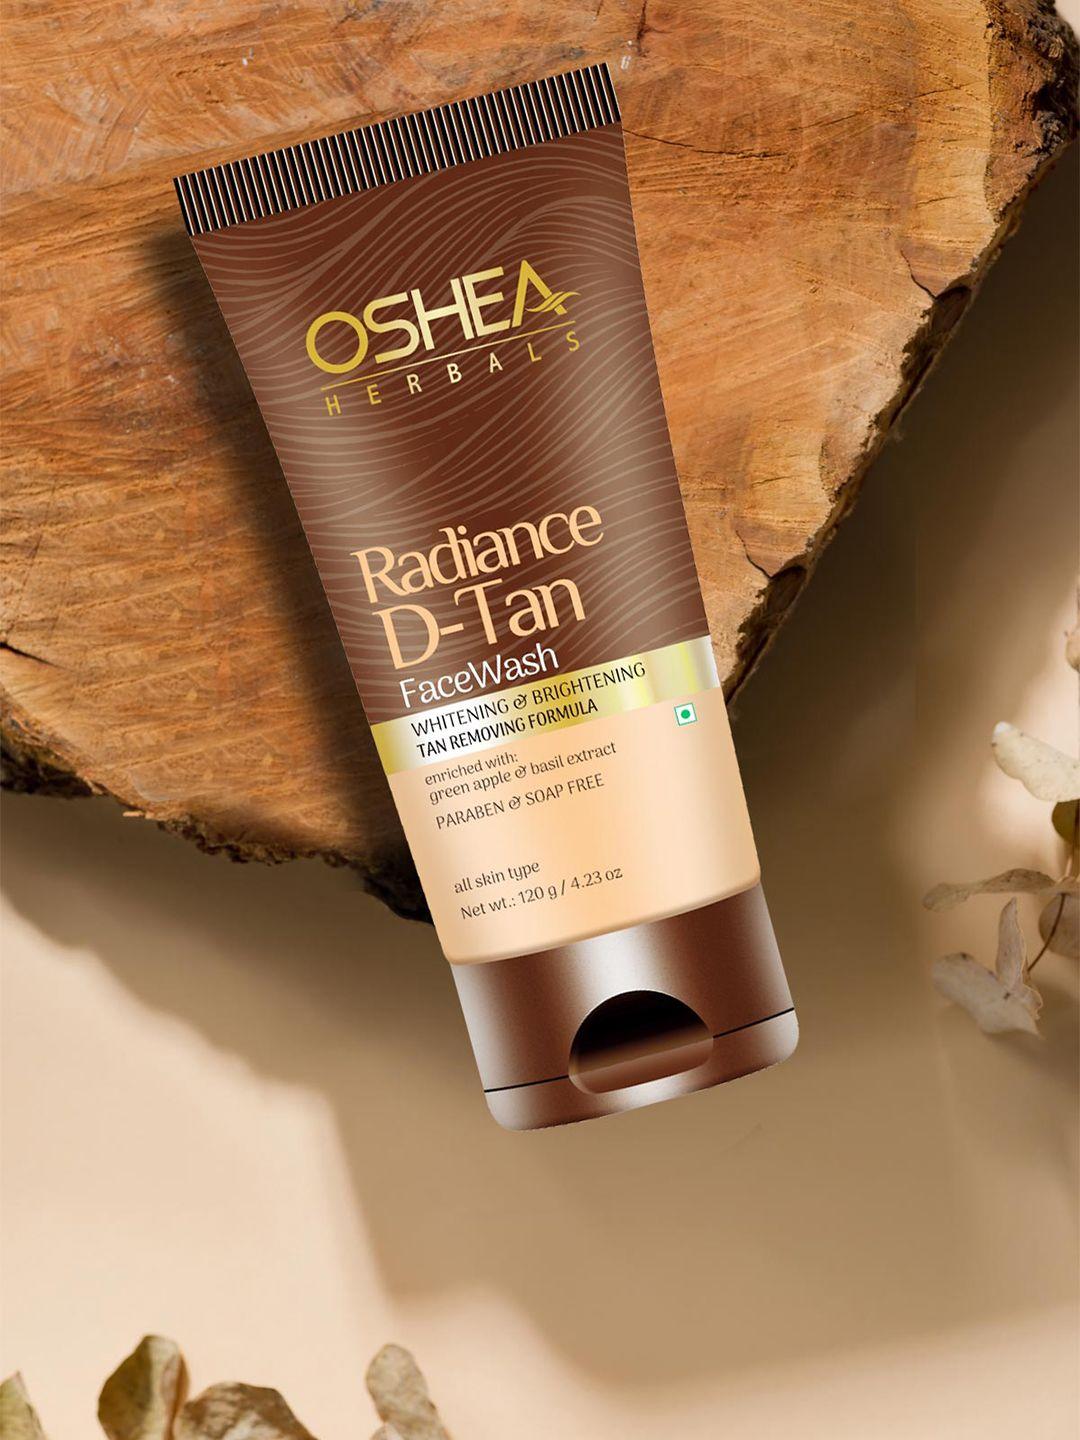 oshea herbals set of 2 radiance d-tan face wash